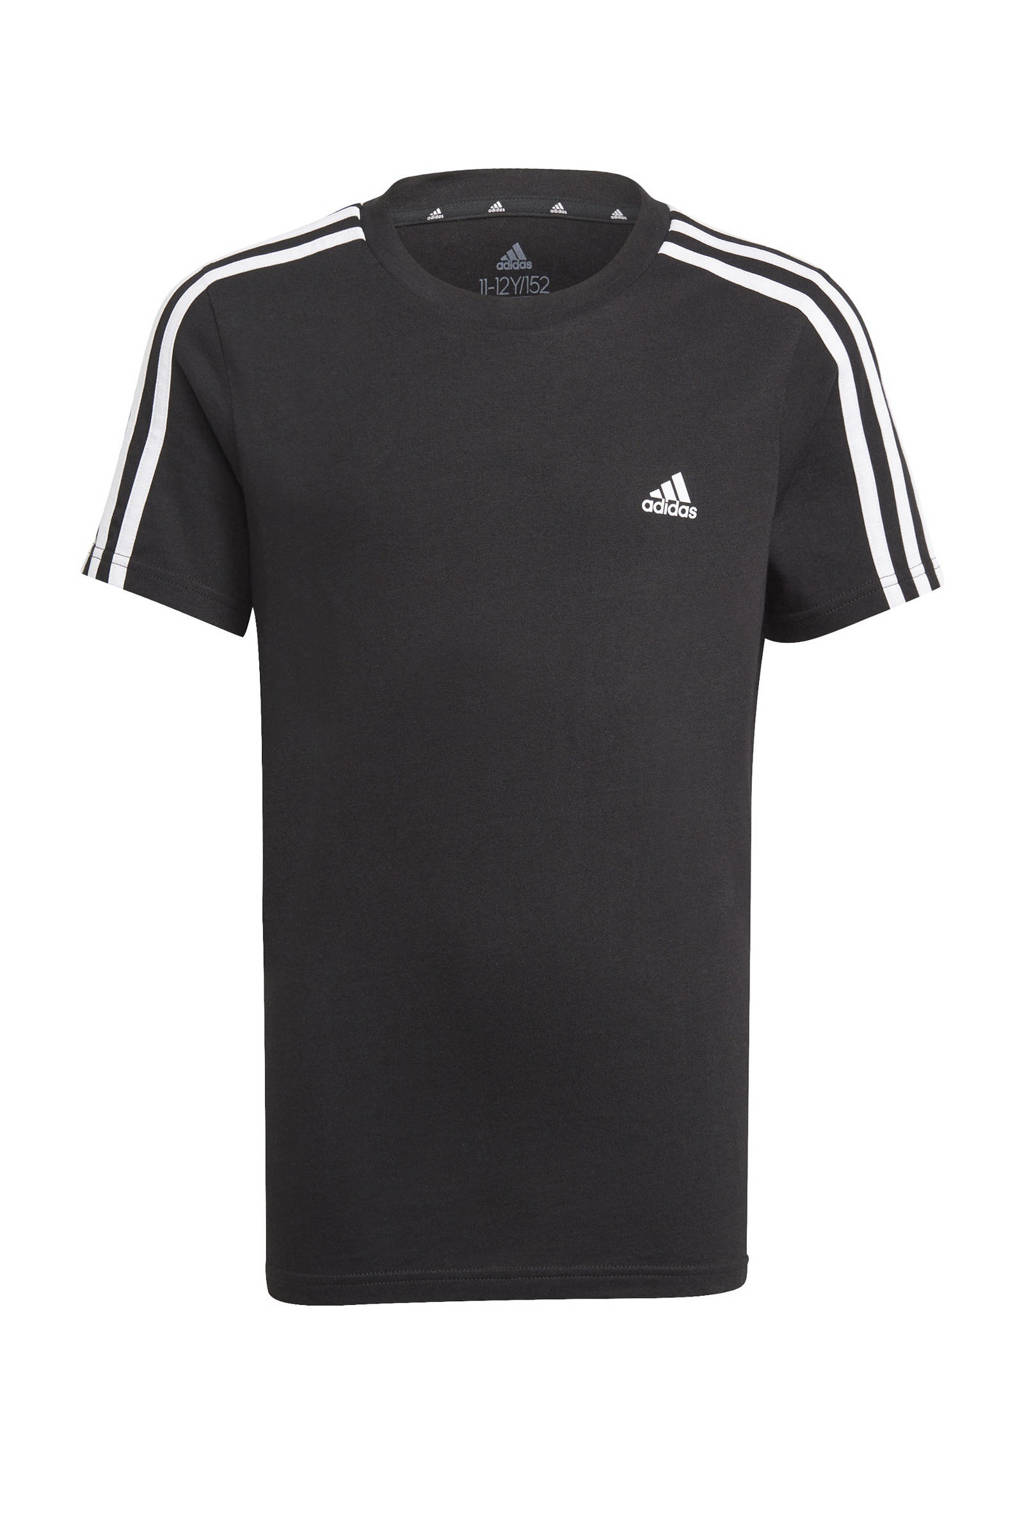 adidas Performance   sport T-shirt zwart/wit, Zwart/wit